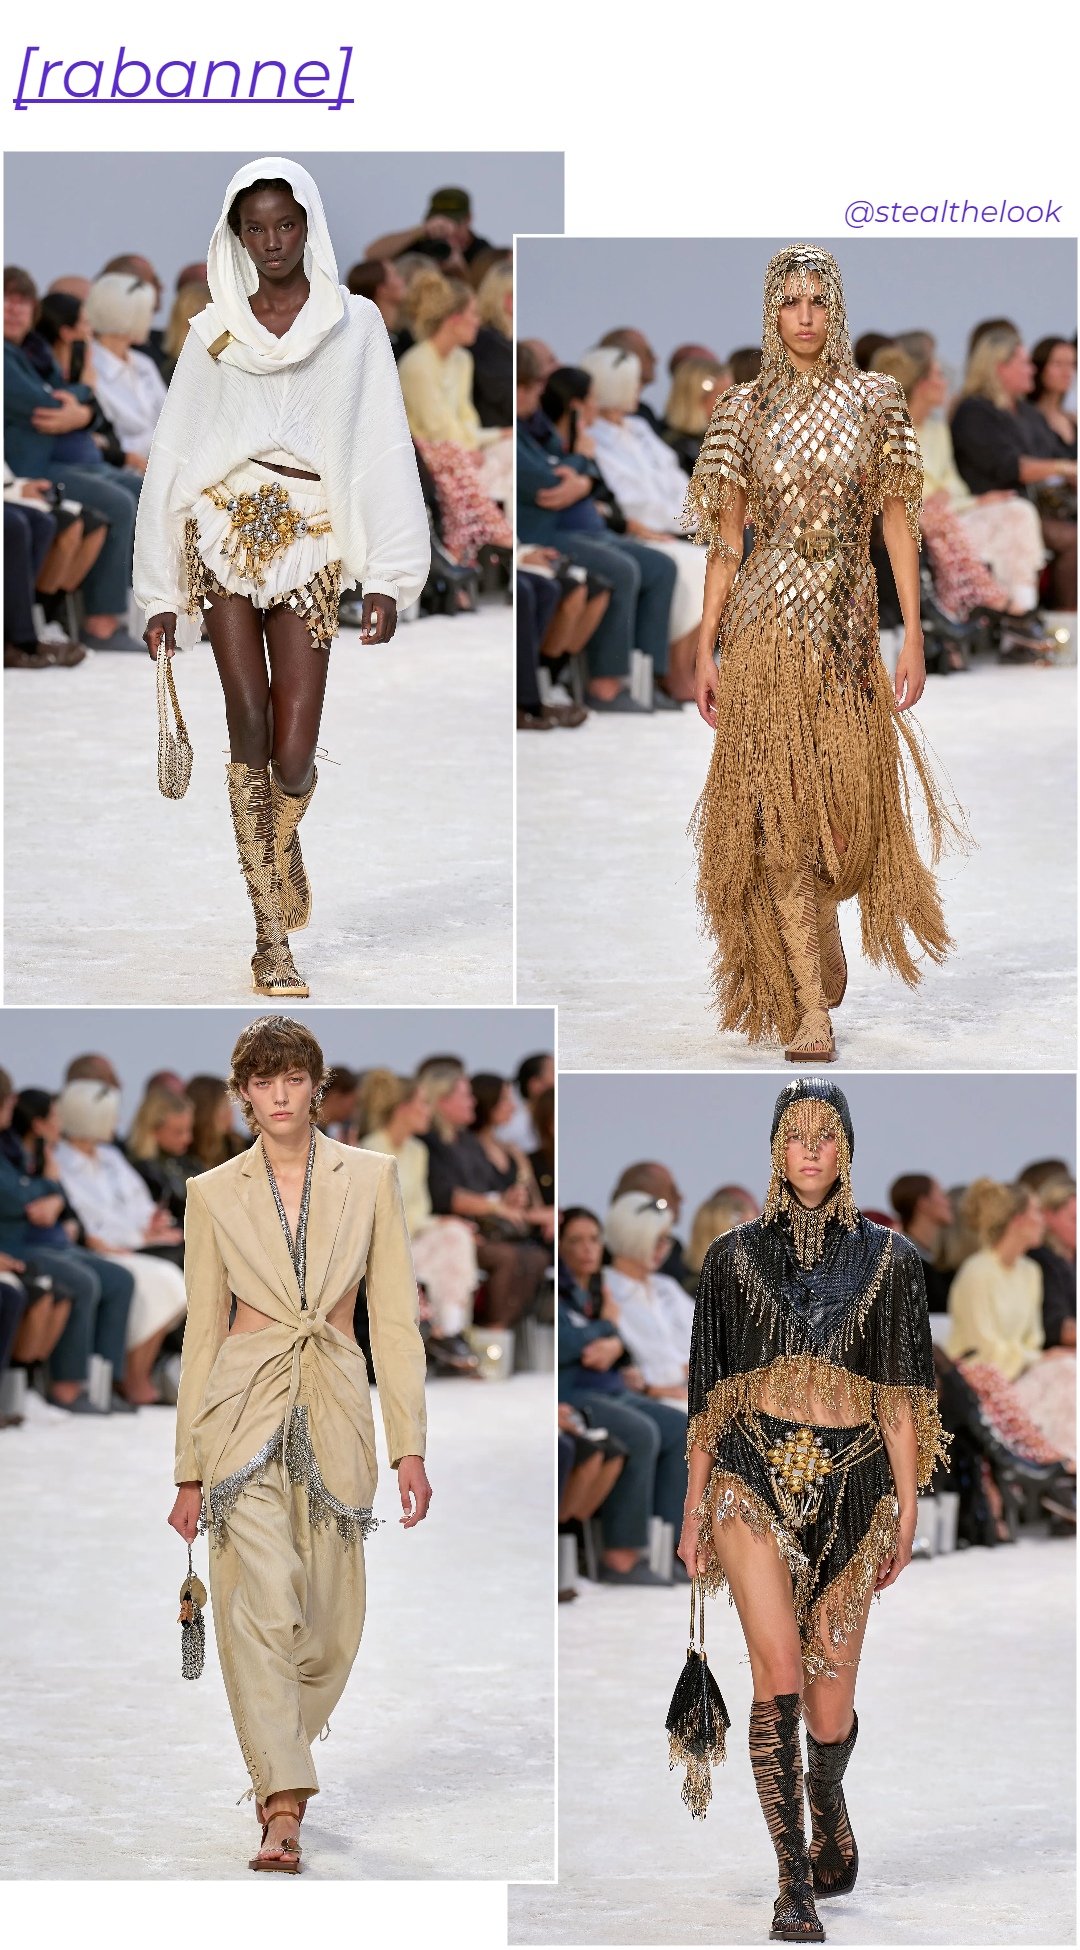 Rabanne - roupas diversas - Paris Fashion Week - verão - colagem de imagens - https://stealthelook.com.br